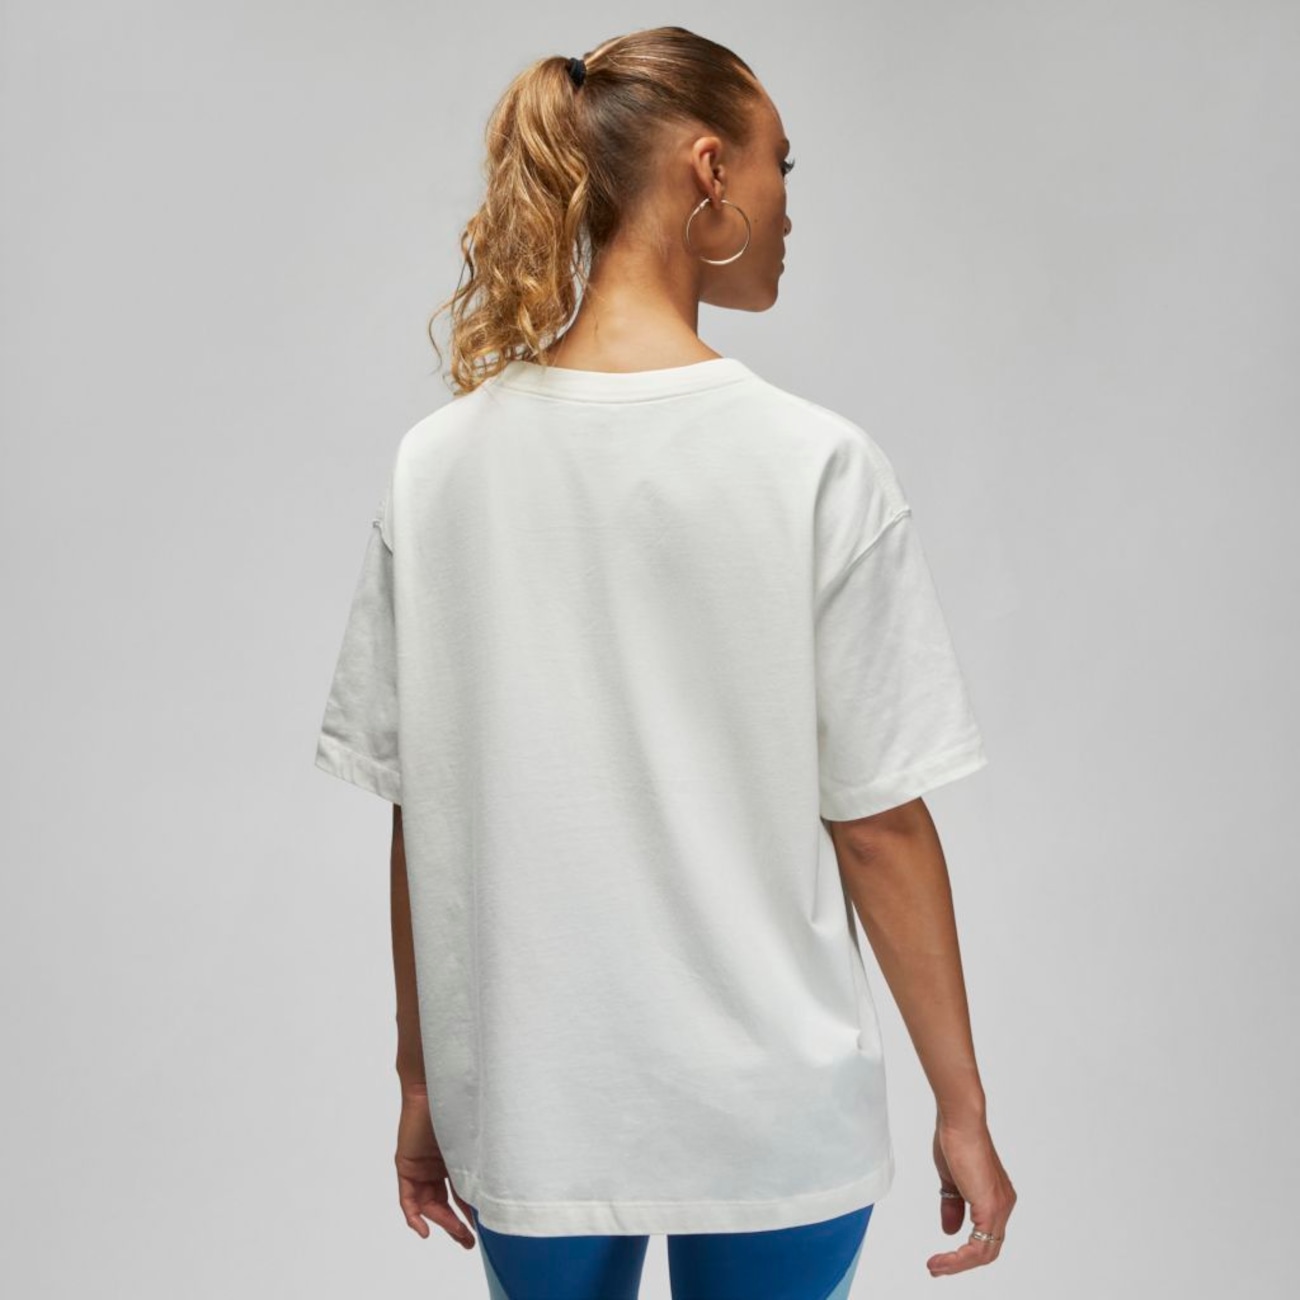 Camiseta Jordan (Her)itage Feminina  - Foto 2